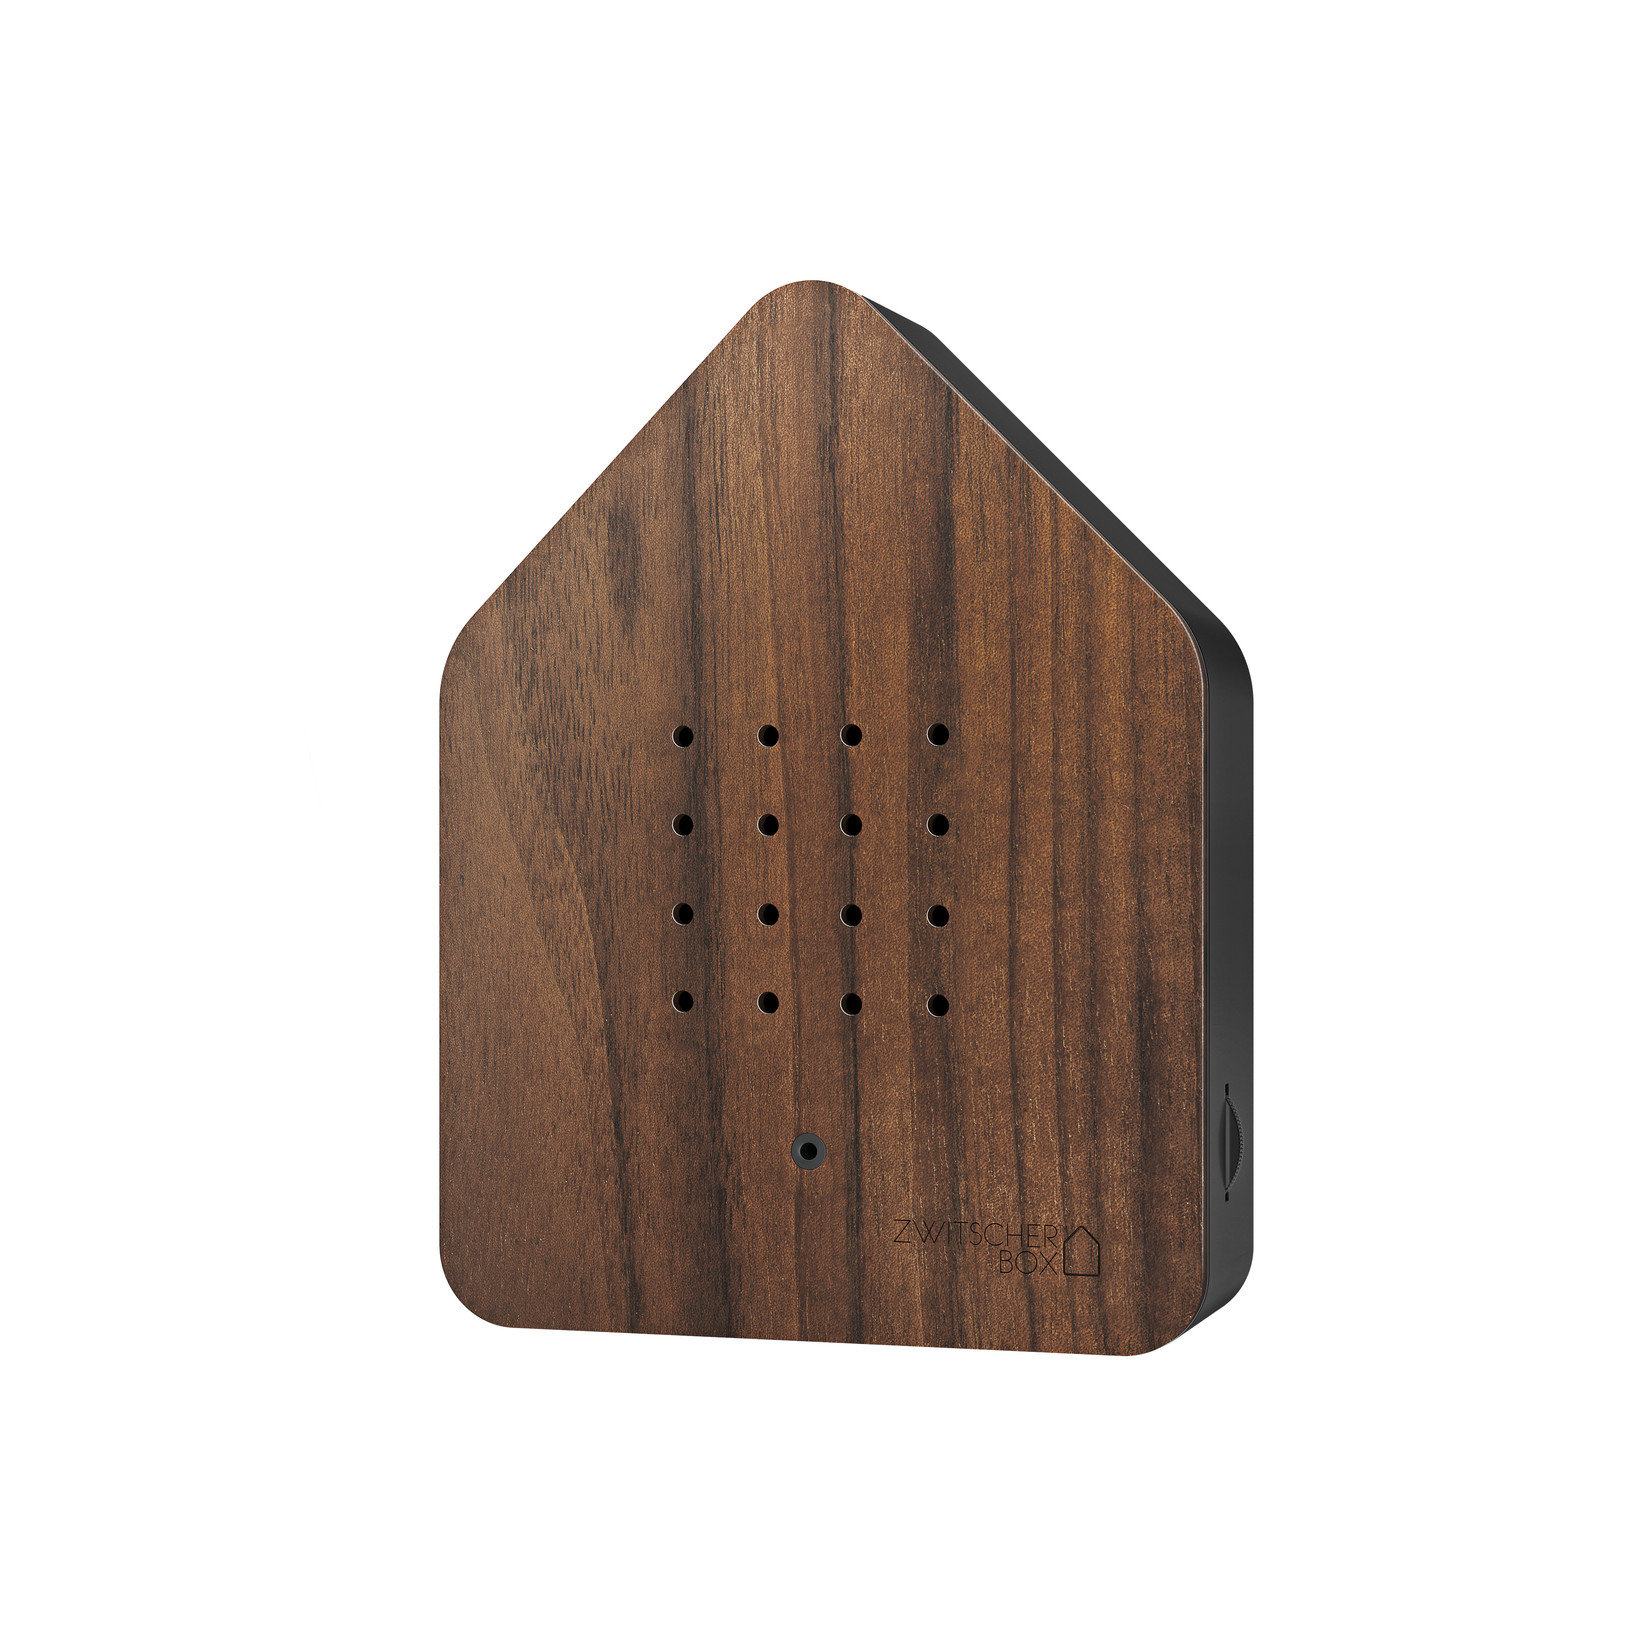 Zwitscherbox Zwitscherbox Wood Walnut/Black met vogelgeluiden